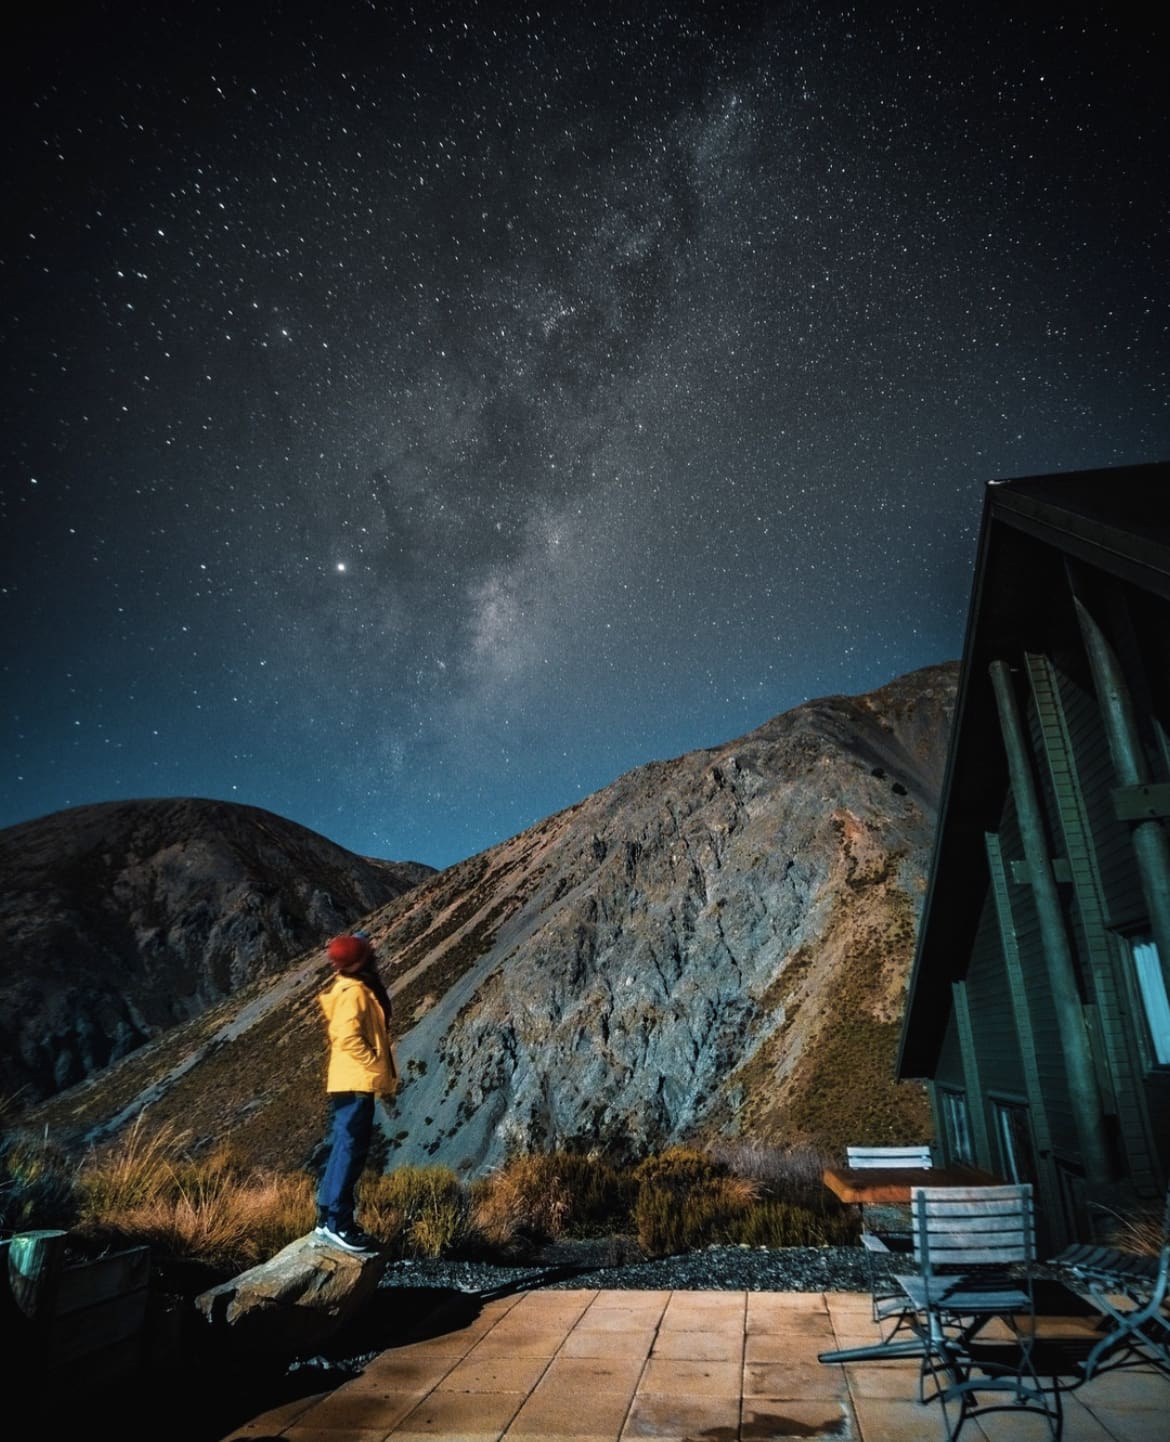 Stargazing on New Zealand's South Island